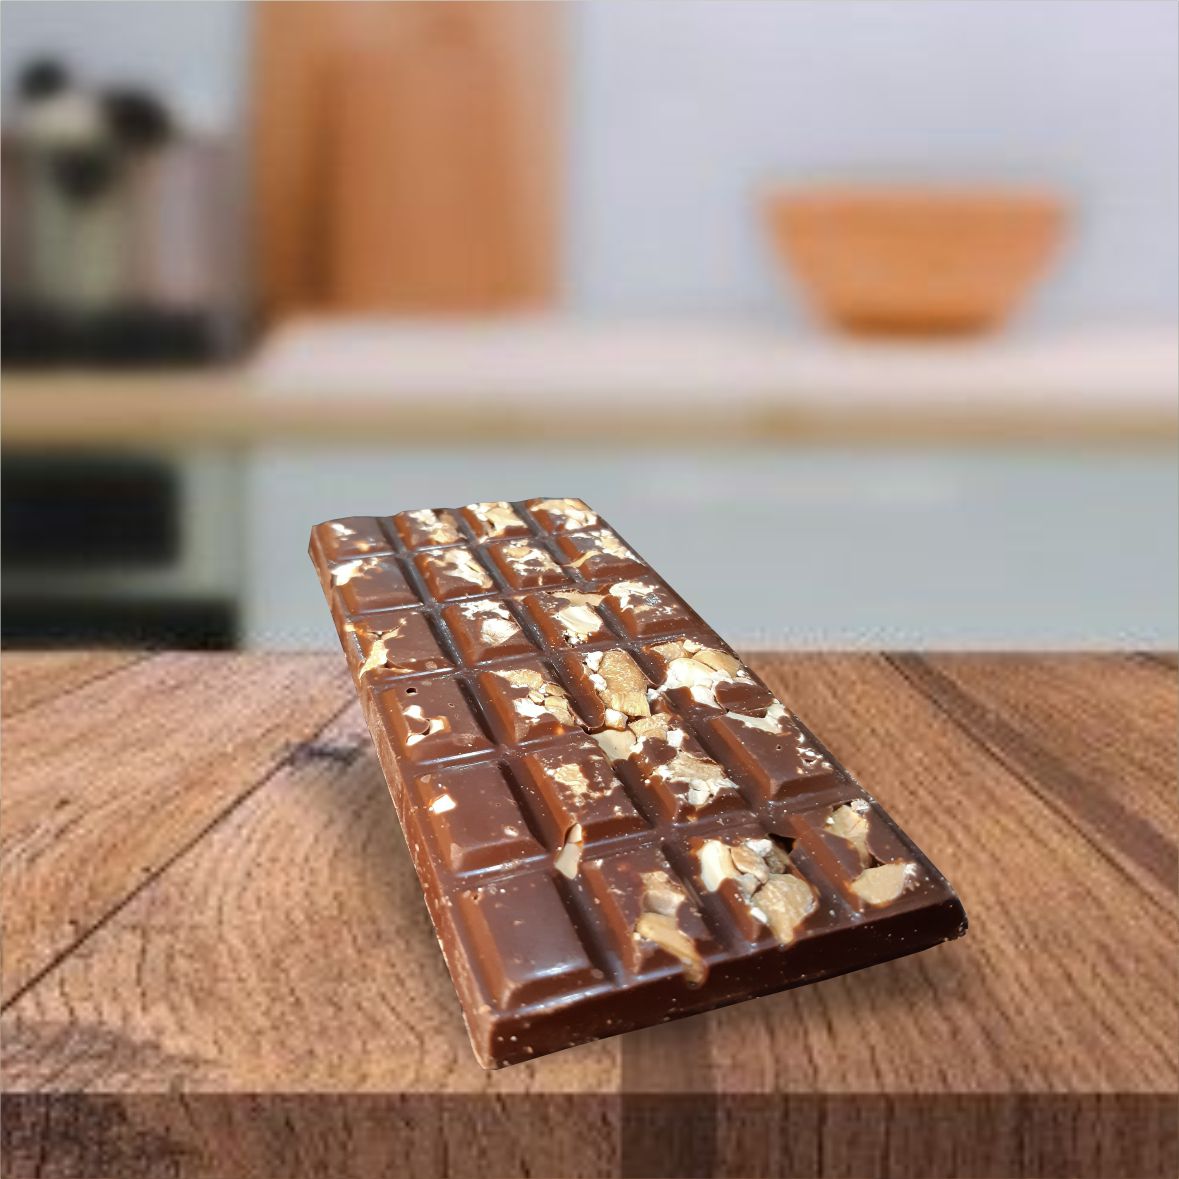 Kit - 3 Barras de Chocolate ao Leite Belga com Nuts + 2 Barras de Chocolate Branco exclusivas